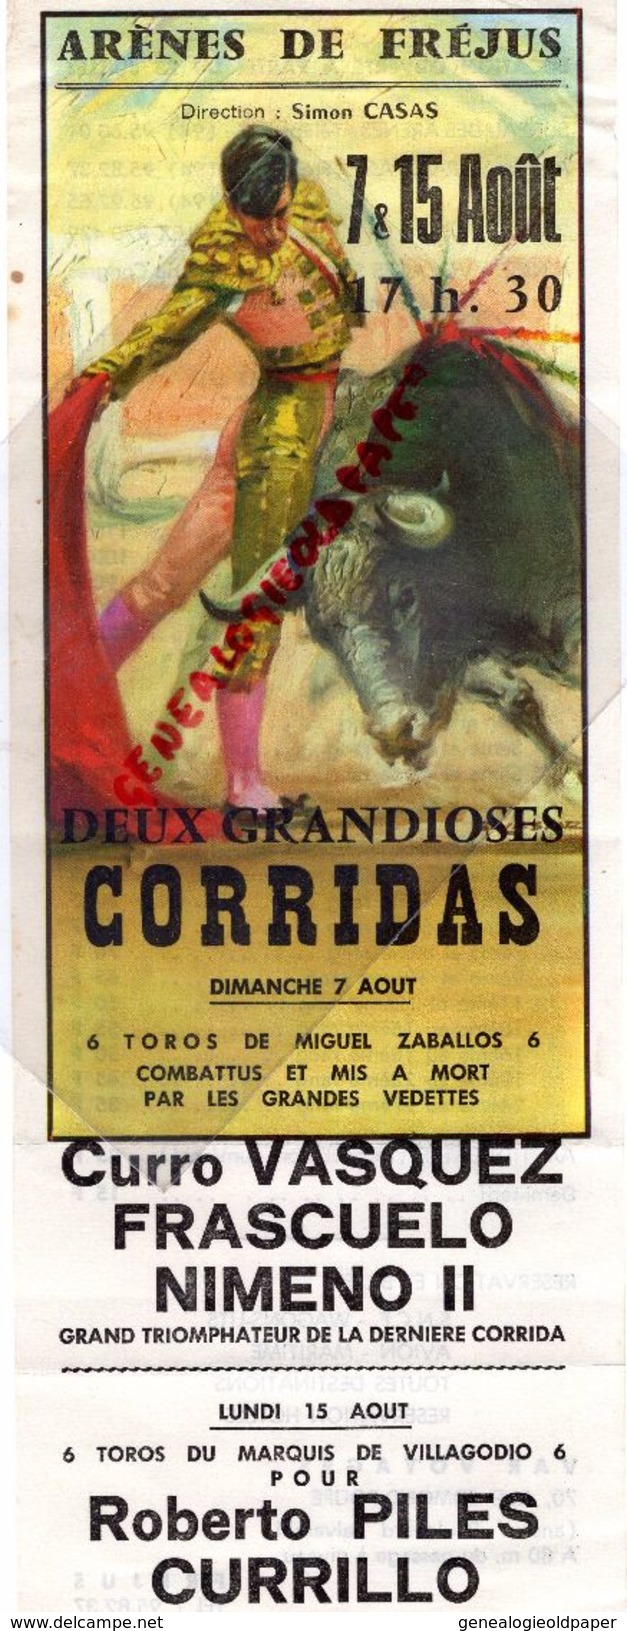 83 - FREJUS- AFFICHETTE ARENES -SIMON CASAS-7/15 AOUT 1970- CORRIDA -MIGUEL ZABALLOS-CURRO VASQUEZ-FRASCUELO-NIMENO II- - Posters